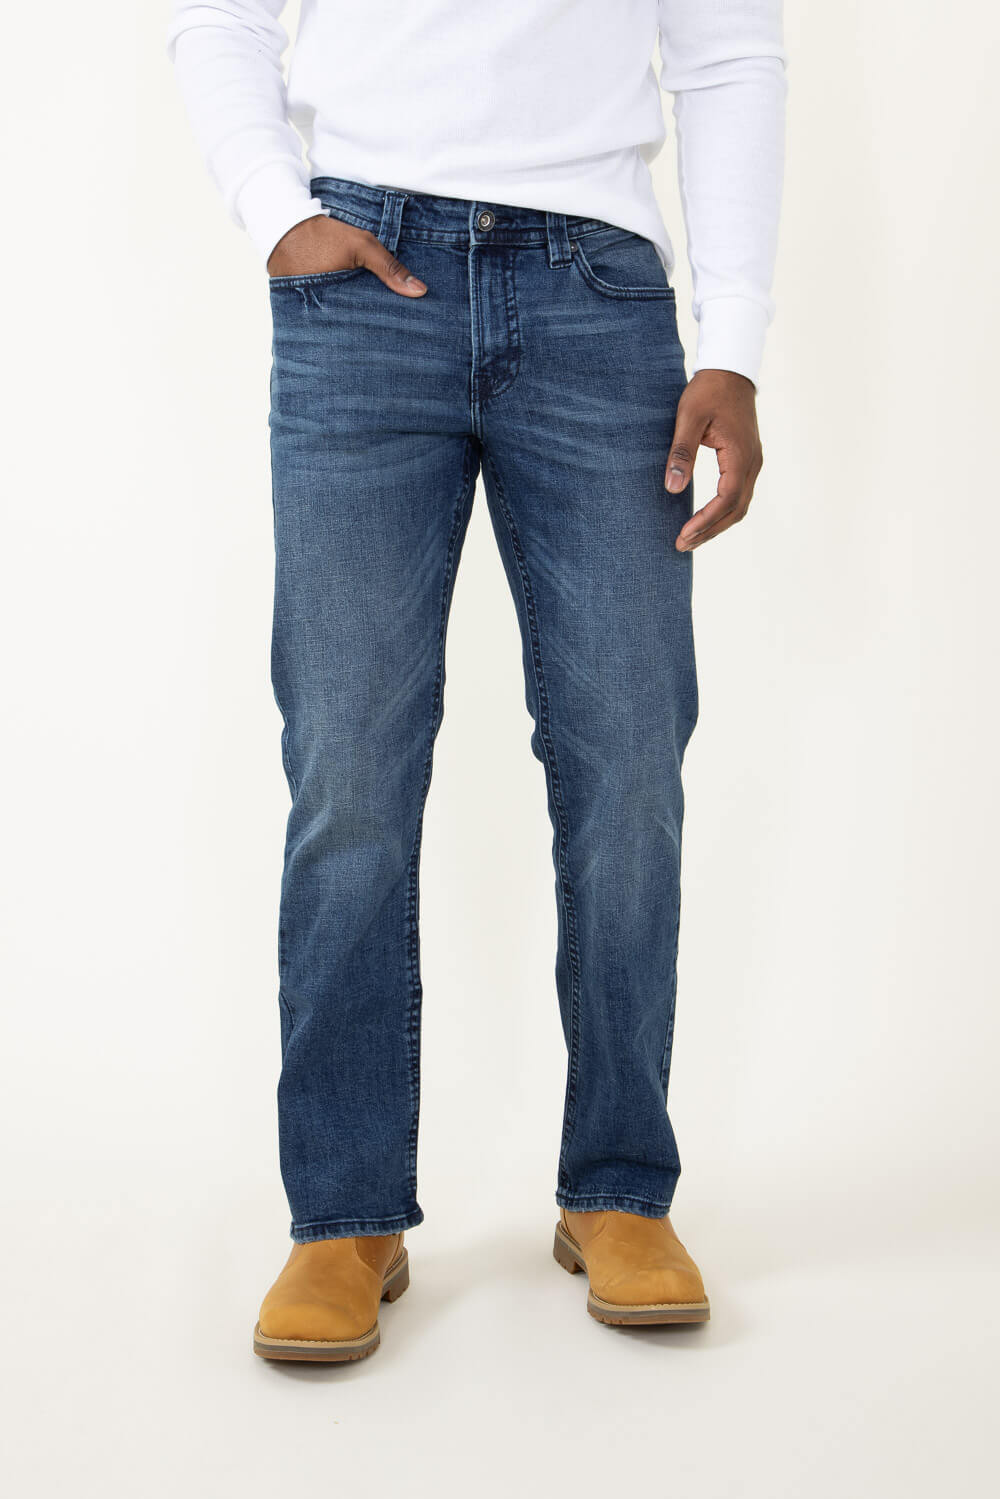 Axel Jeans Stephen Slim Boot Jeans for Men | Slim boot jeans, Mens jeans,  Comfortable jeans